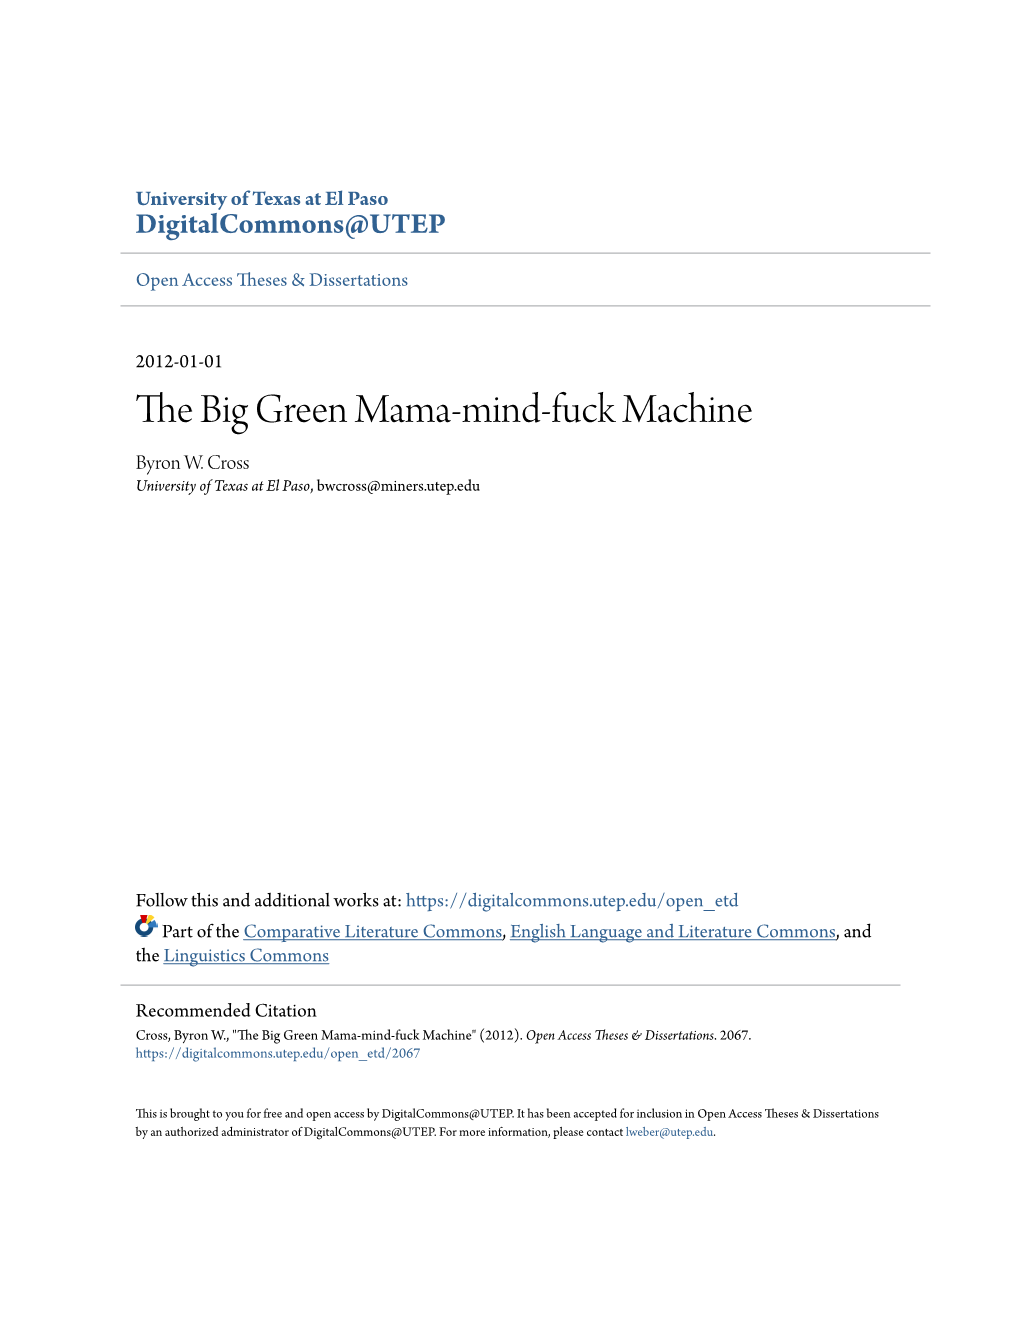 The Big Green Mama-Mind-Fuck Machine